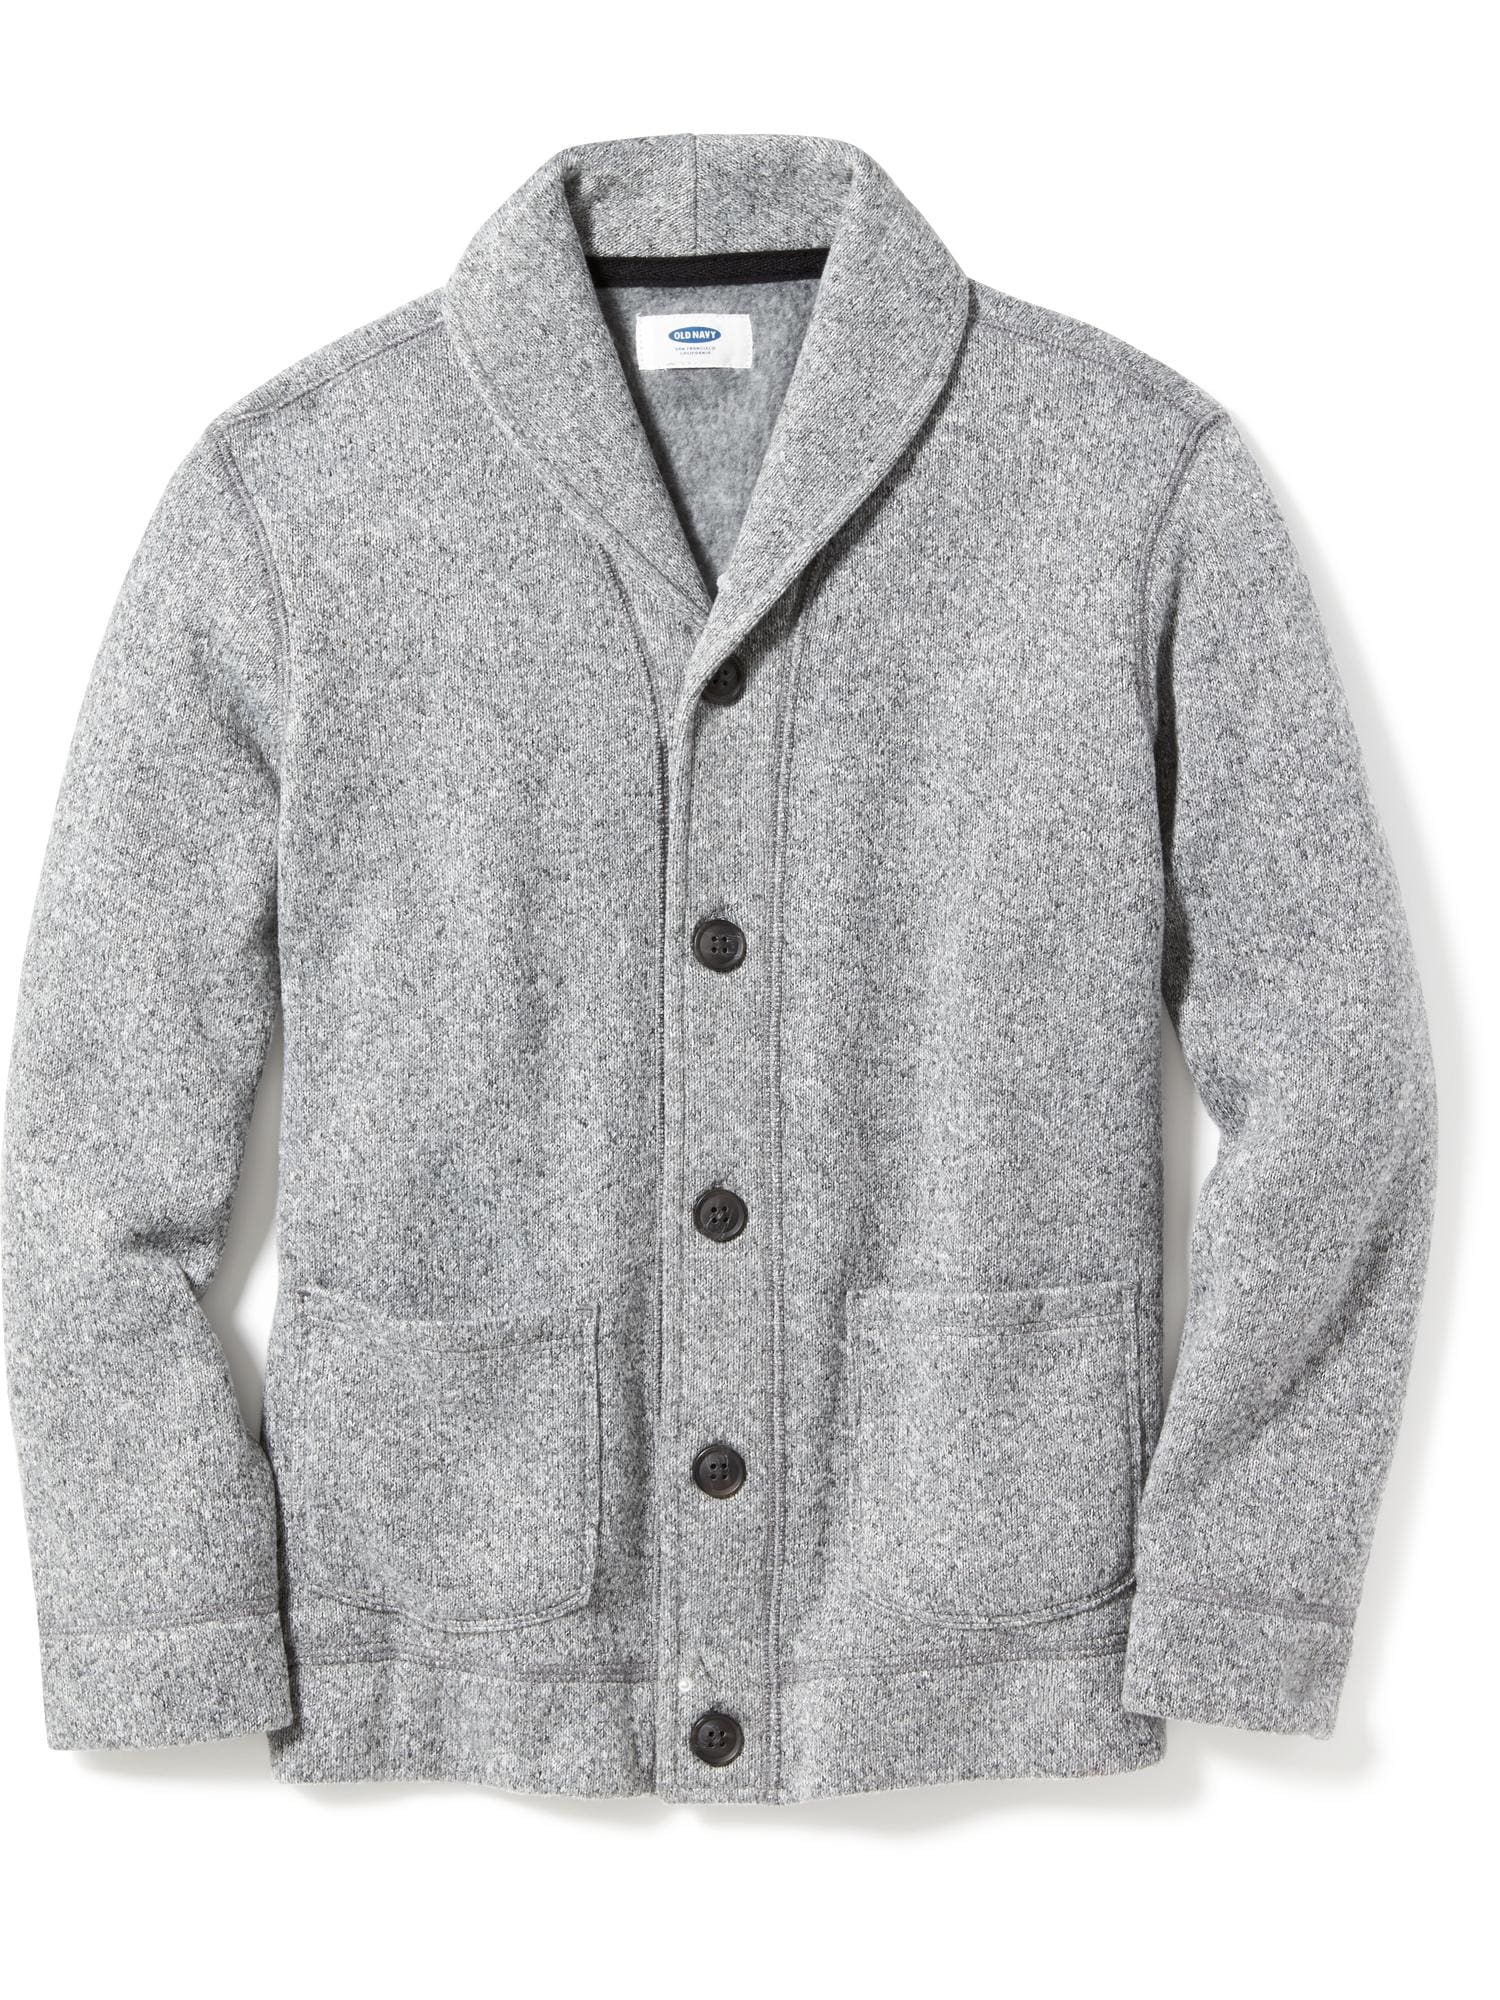 Sweater-Knit Fleece Cardigan for Boys | Old Navy